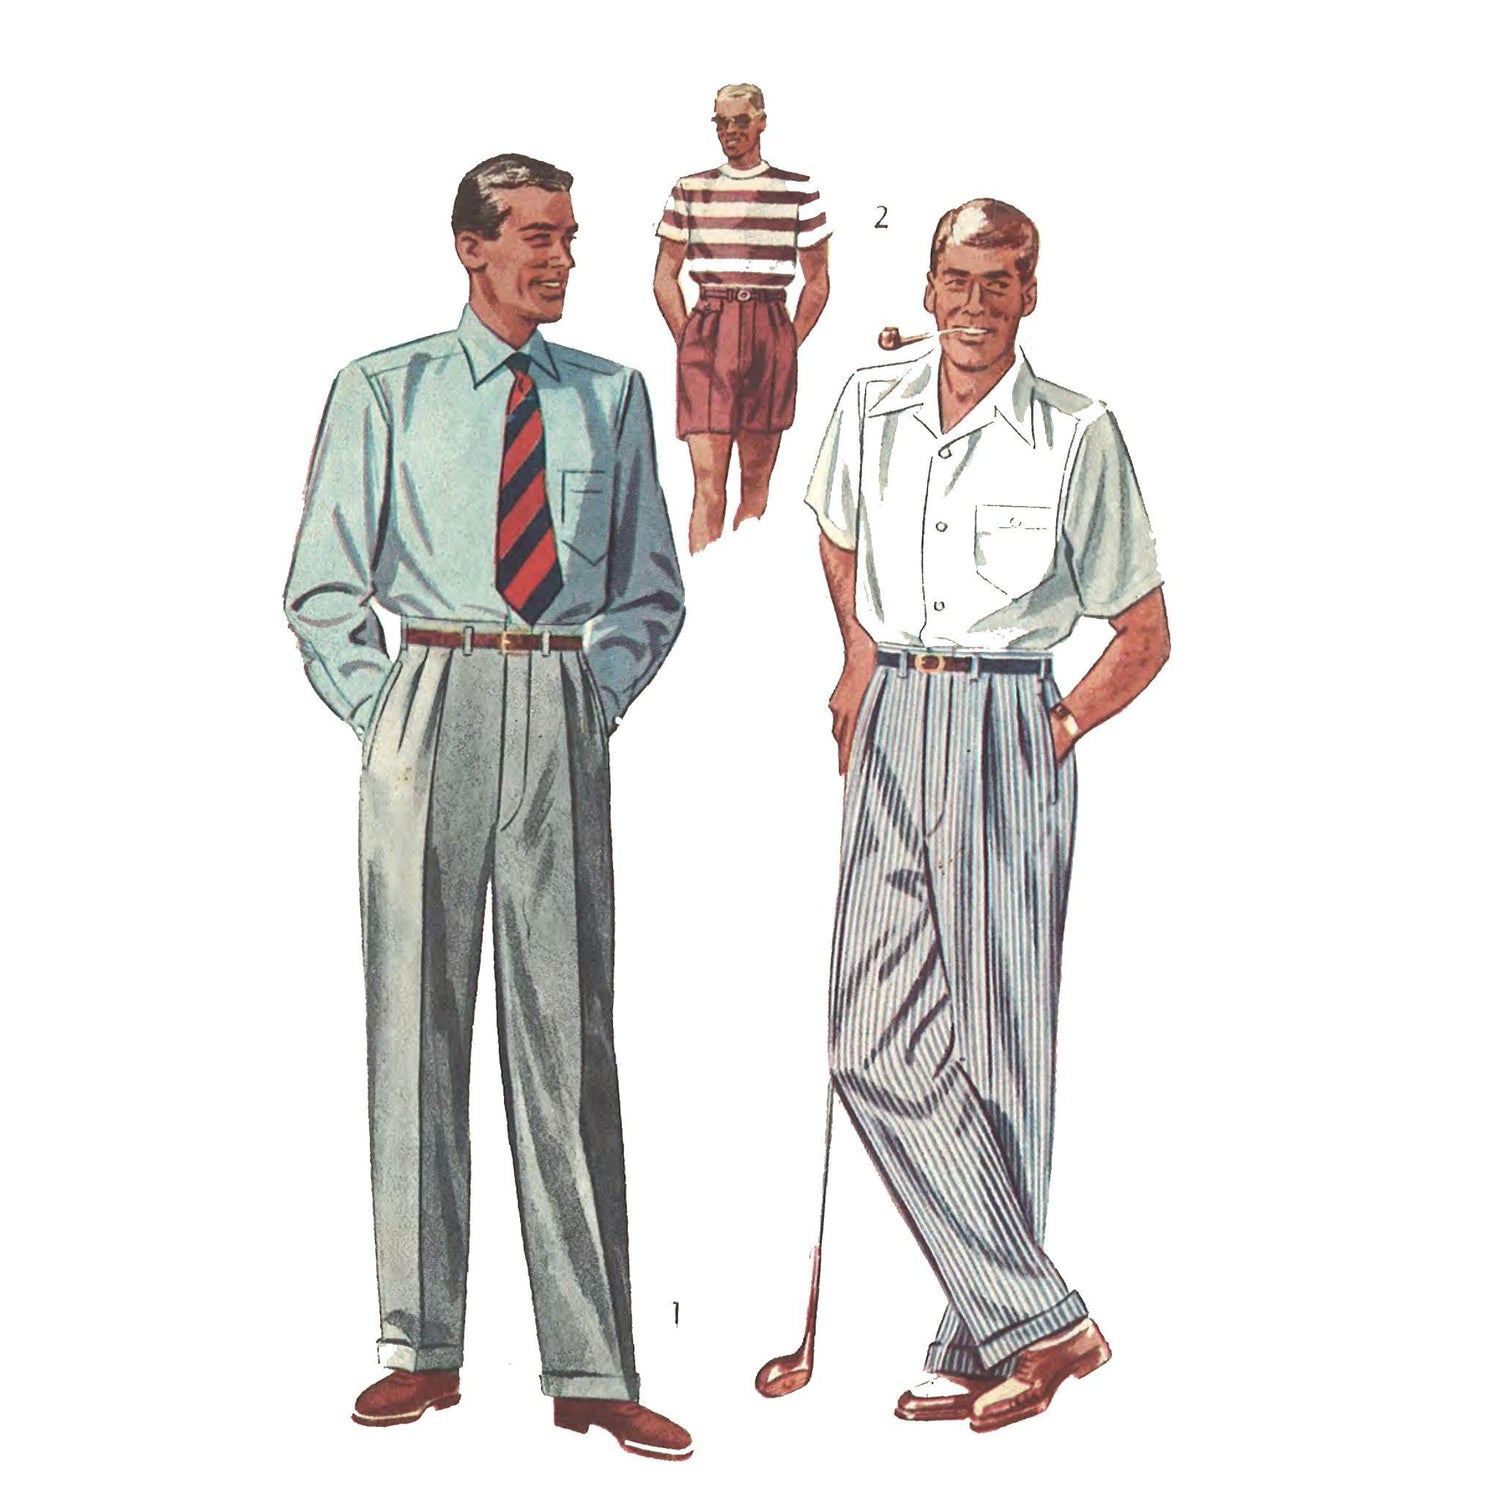 Vintage sewing pattern illustration of 3 mean wearing 50's slacks and shorts